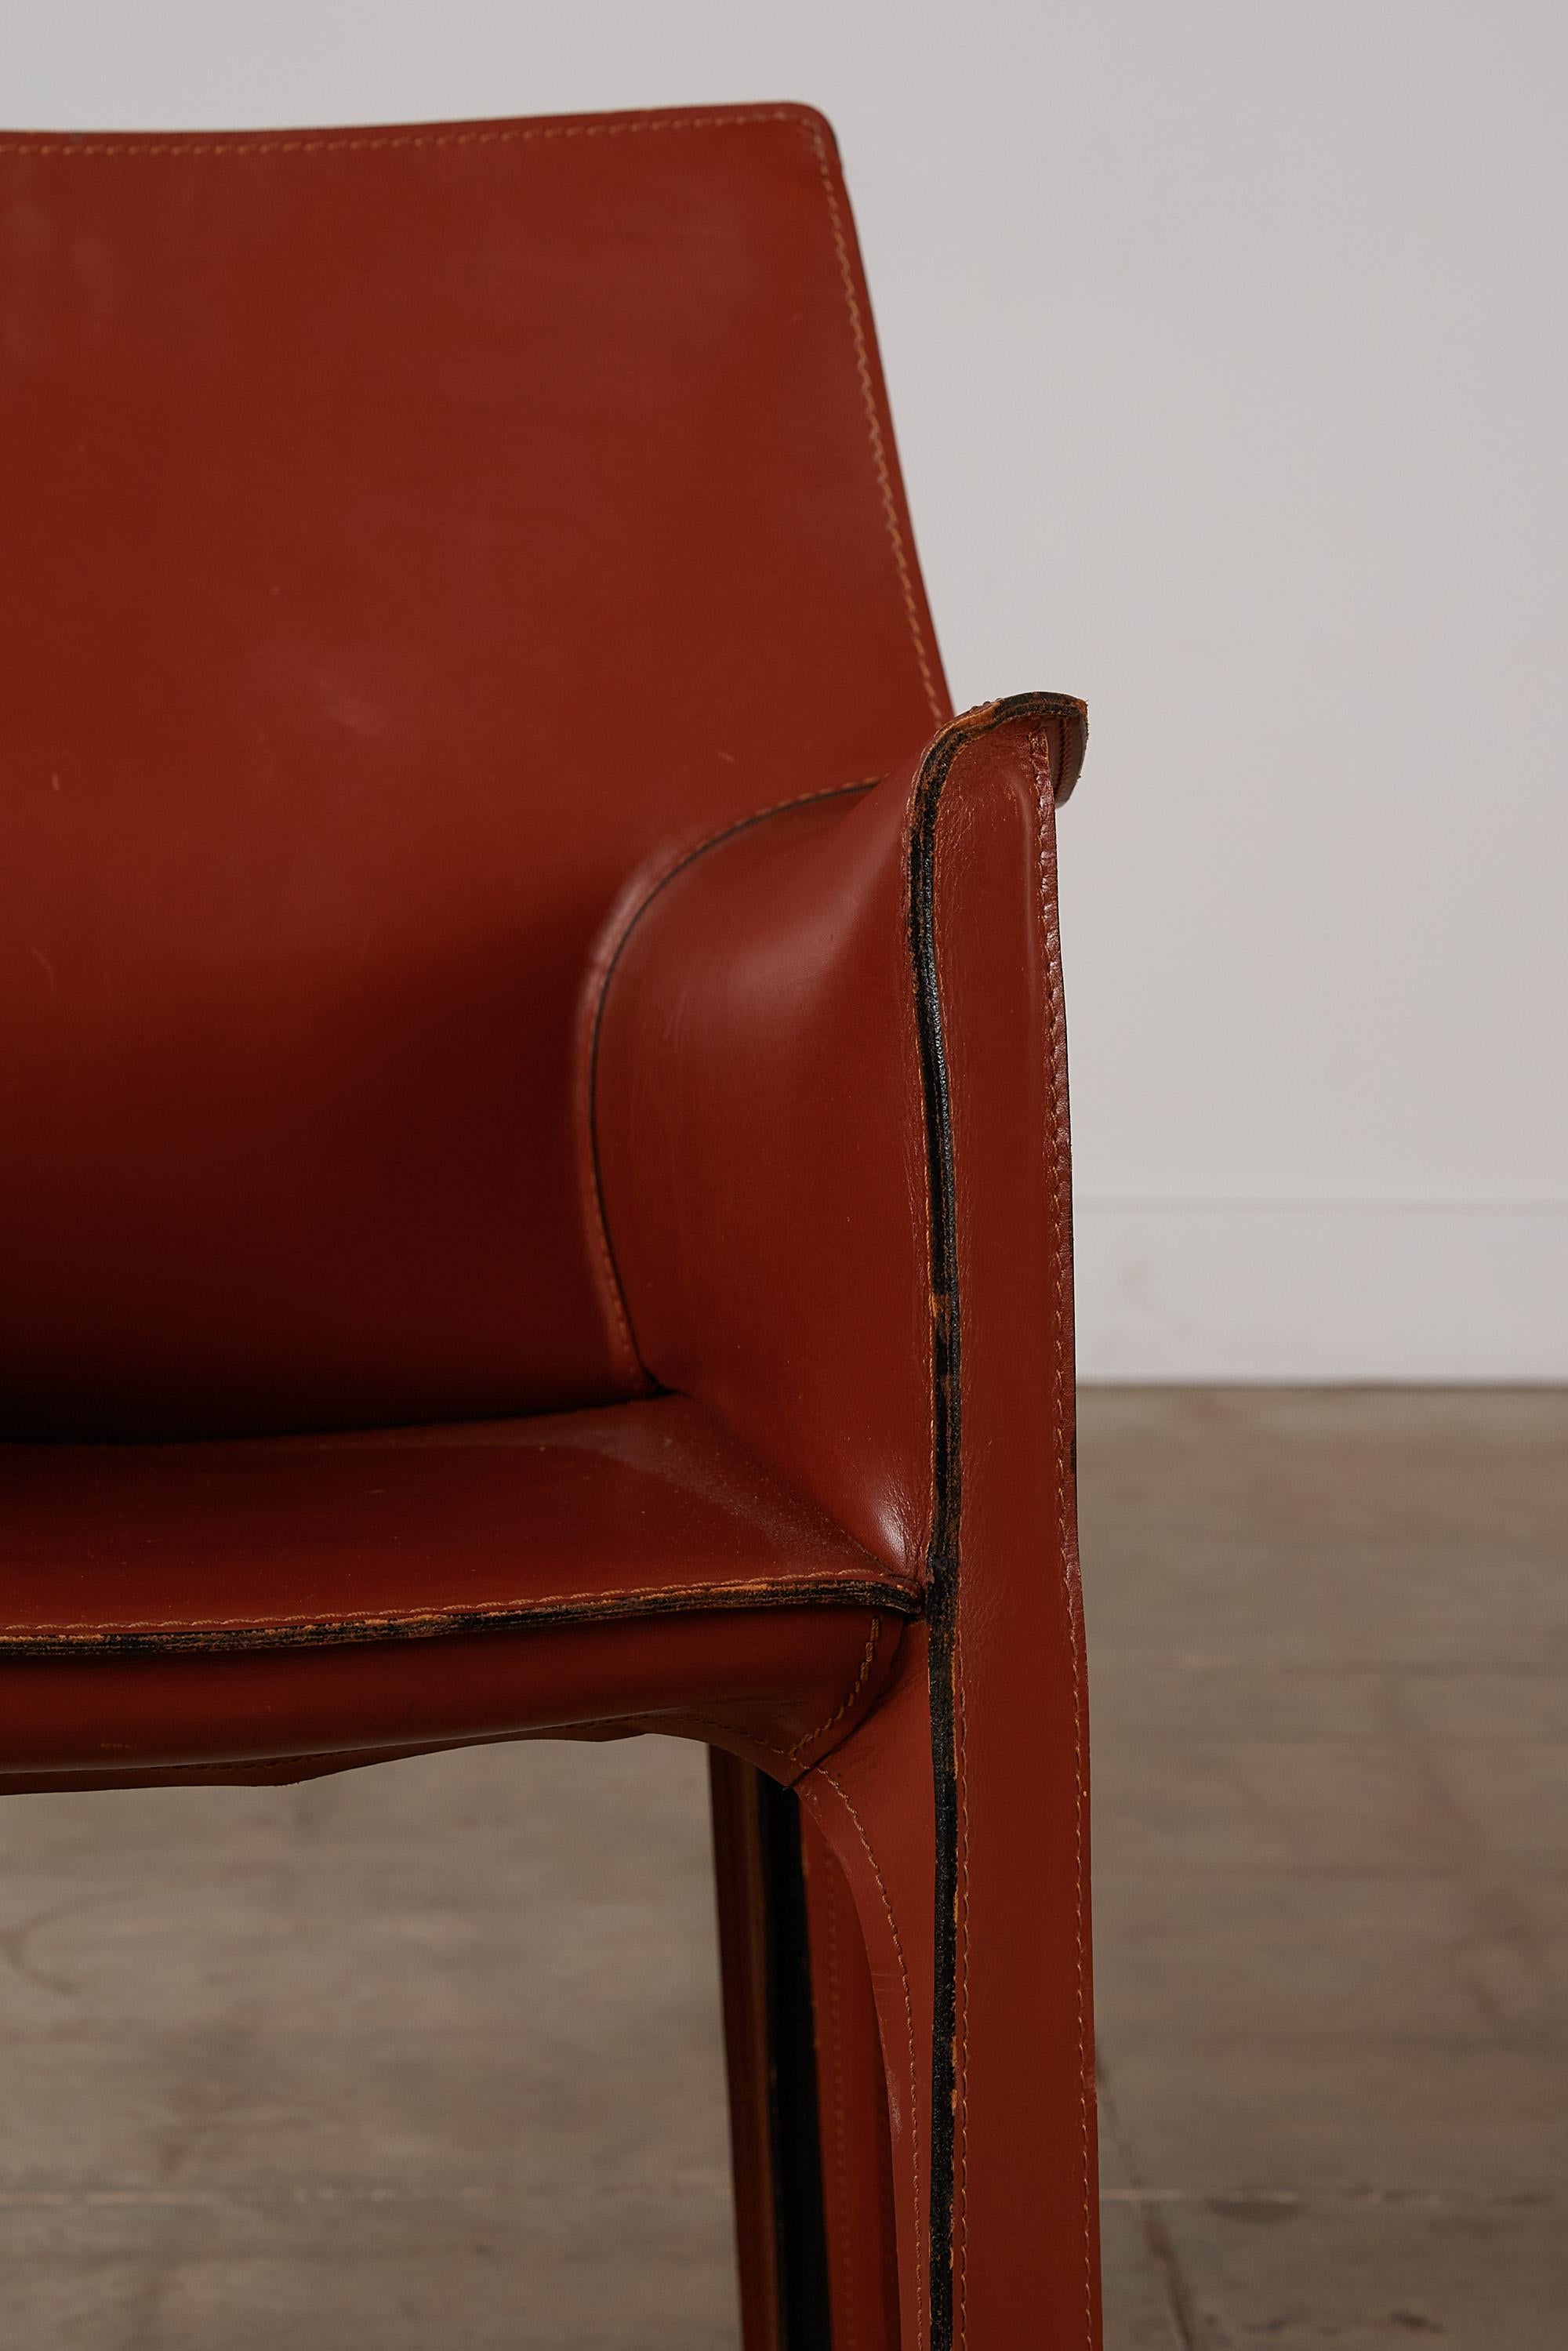 Metal Mario Bellini Cab Arm Chair for Cassina